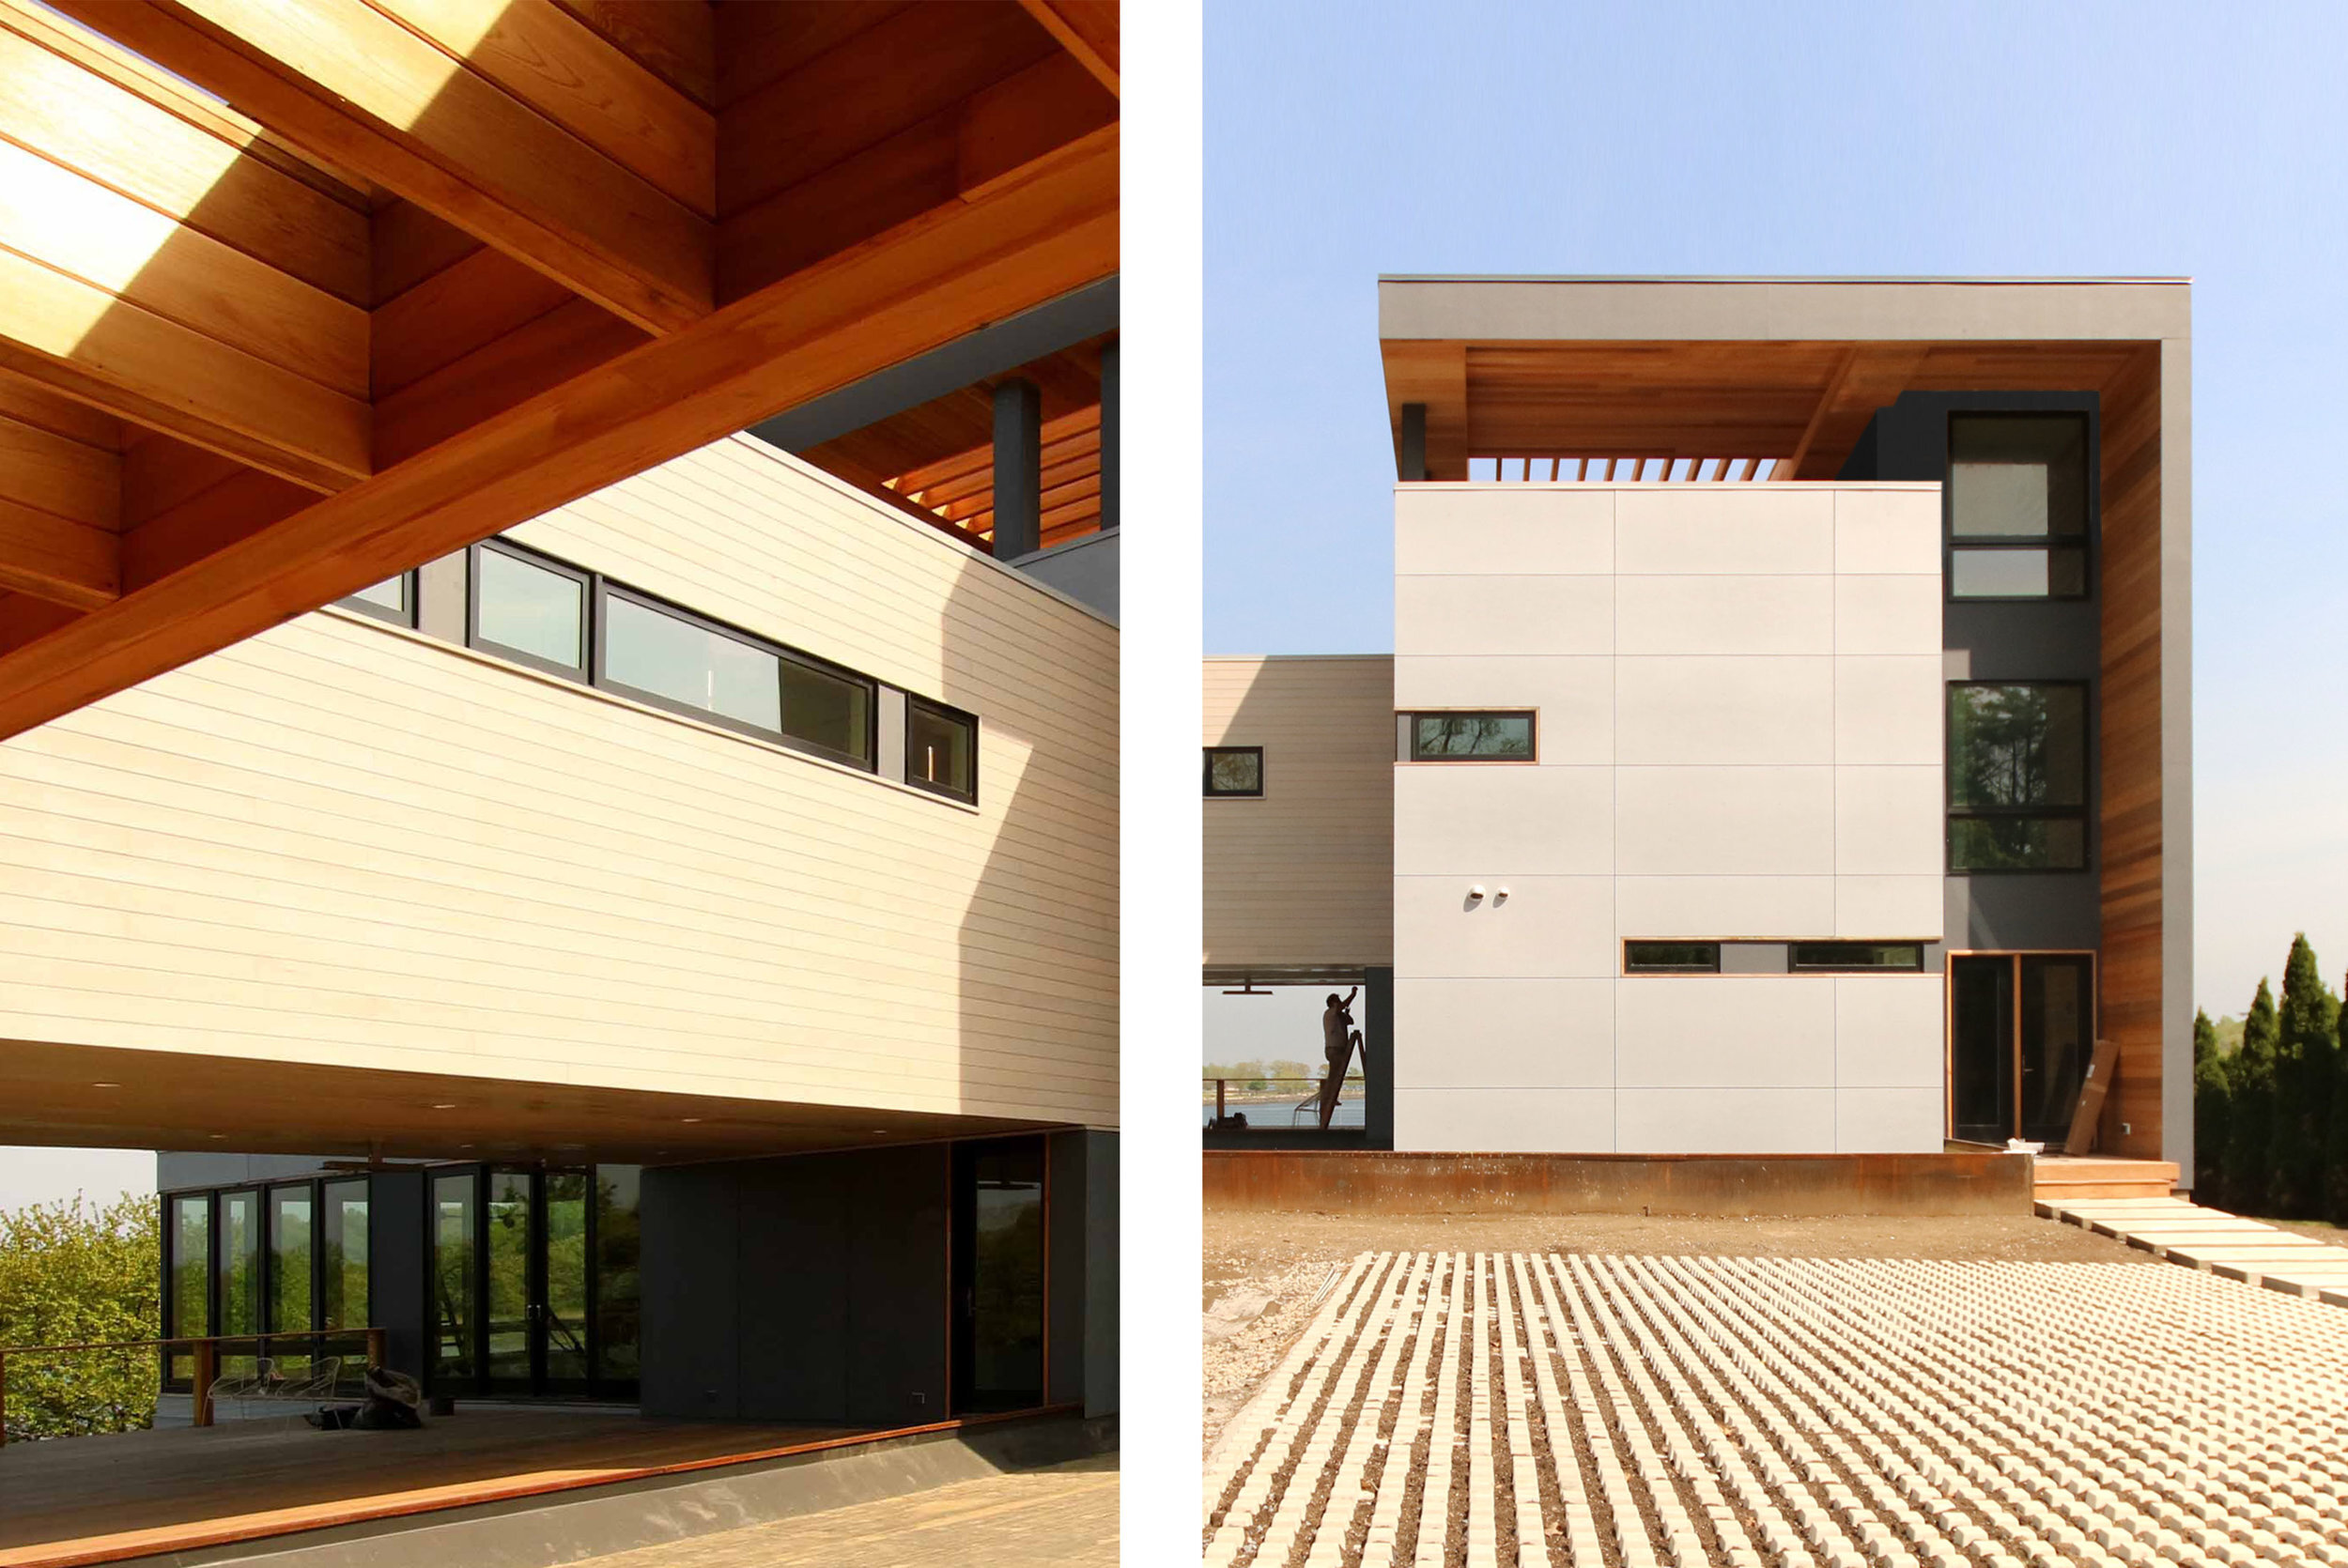 07_res4-resolution-4-architecture-modern-modular-prefab-pelham-bay-house-exterior-siding-construction-driveway-permeable-pavers.jpg